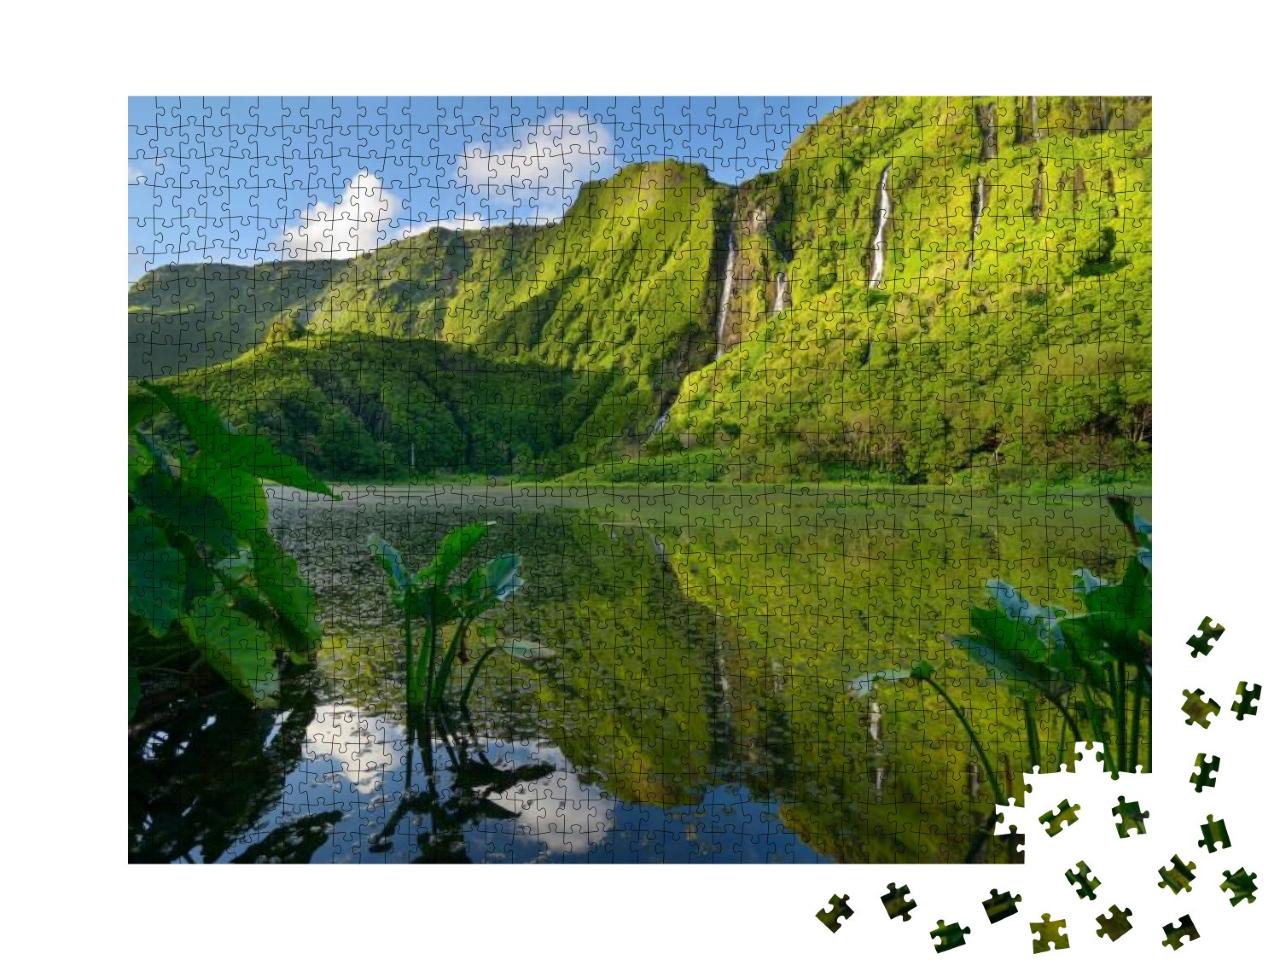 Puzzle 1000 Teile „Wunderschöne bewaldete Insel Flores, Azoren, Portugal“